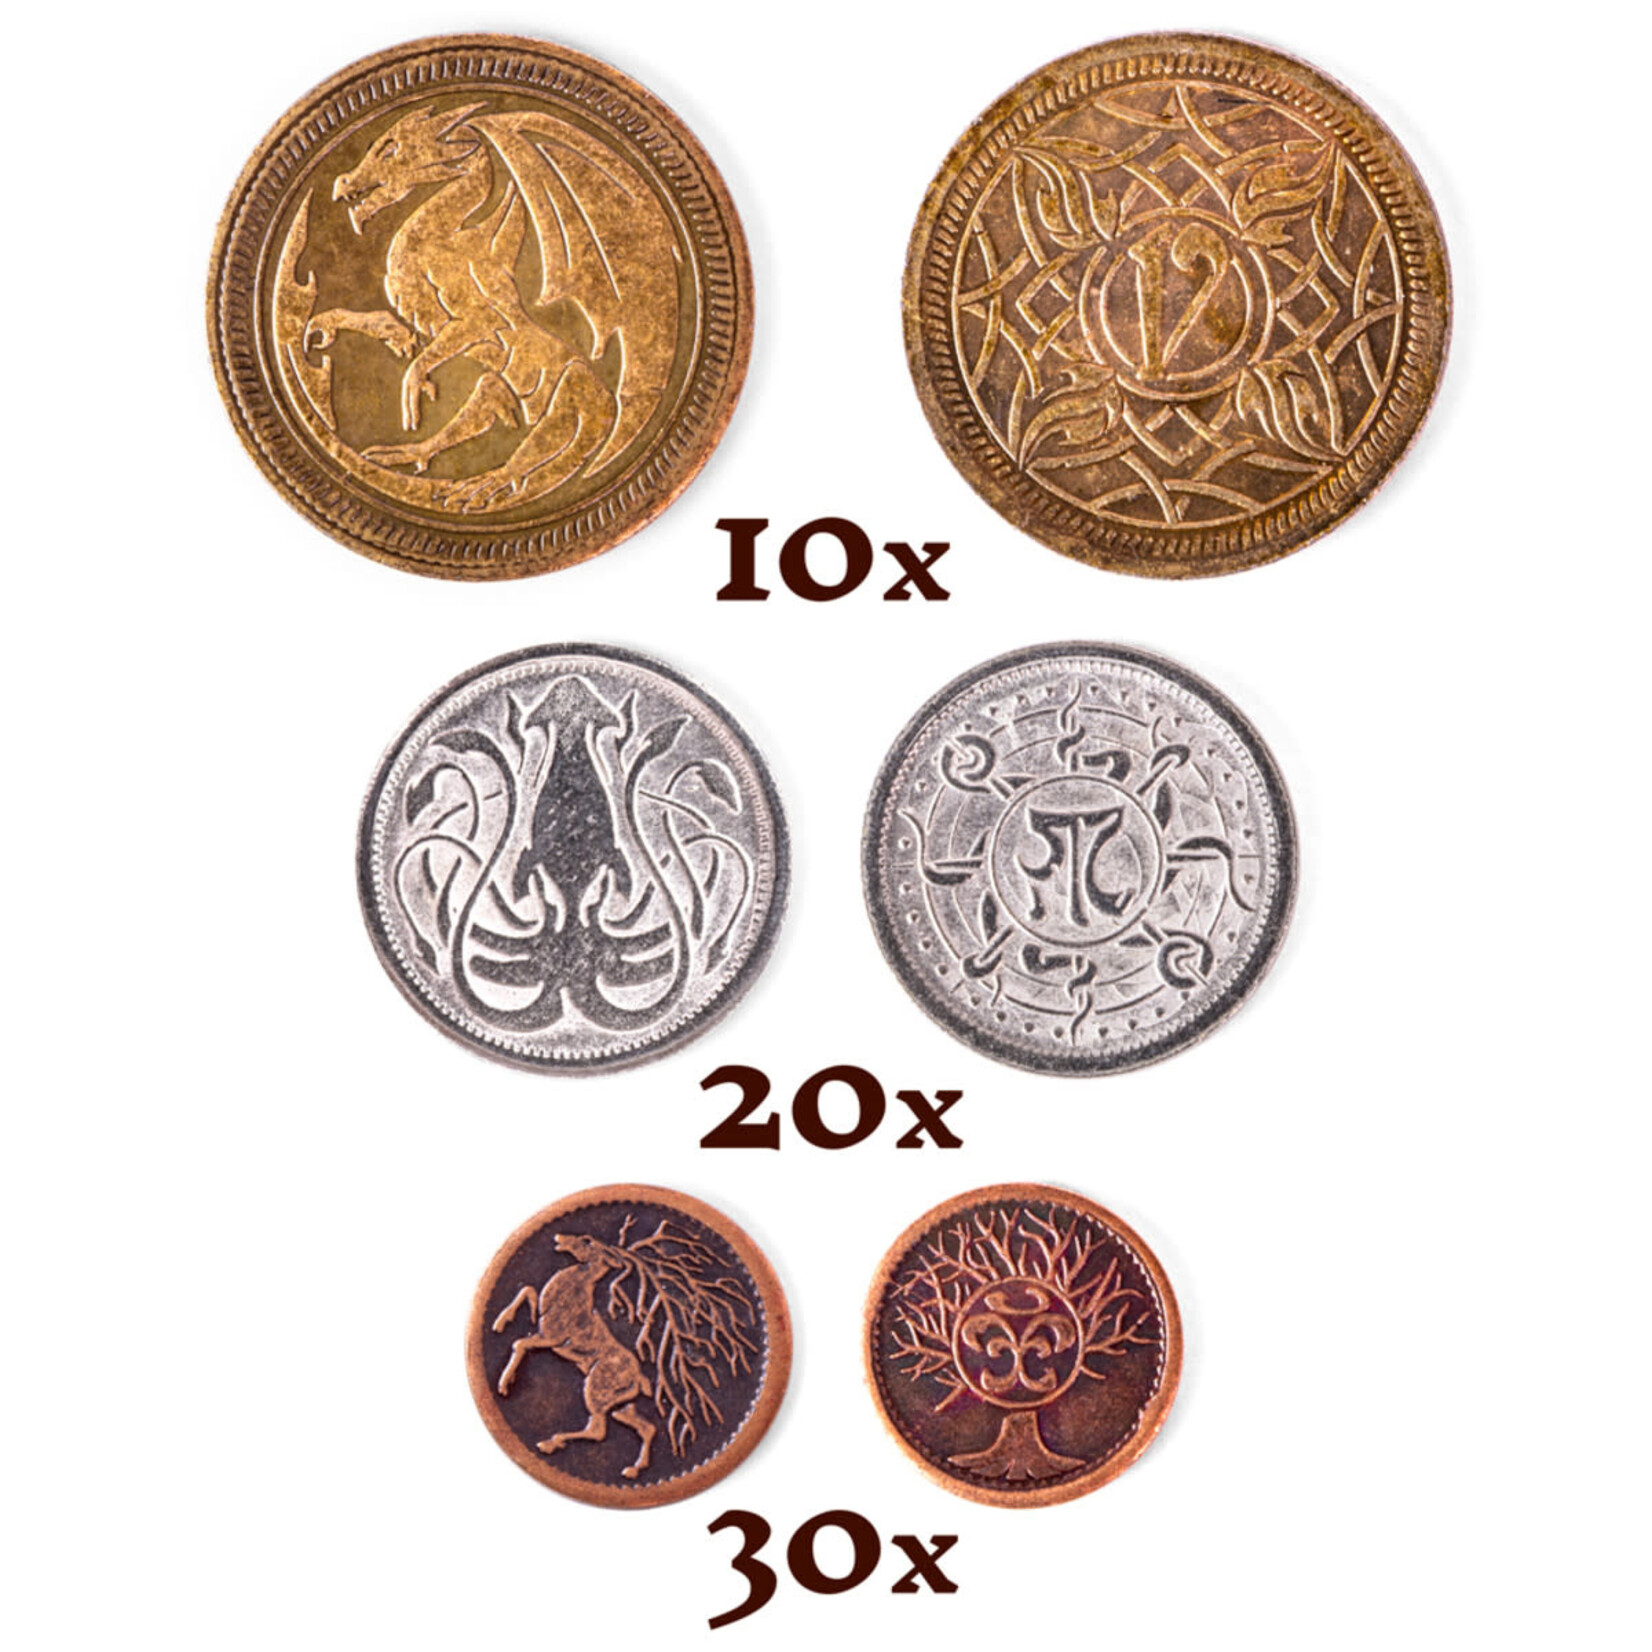 The Dragon's Hoard Fantasy Coins